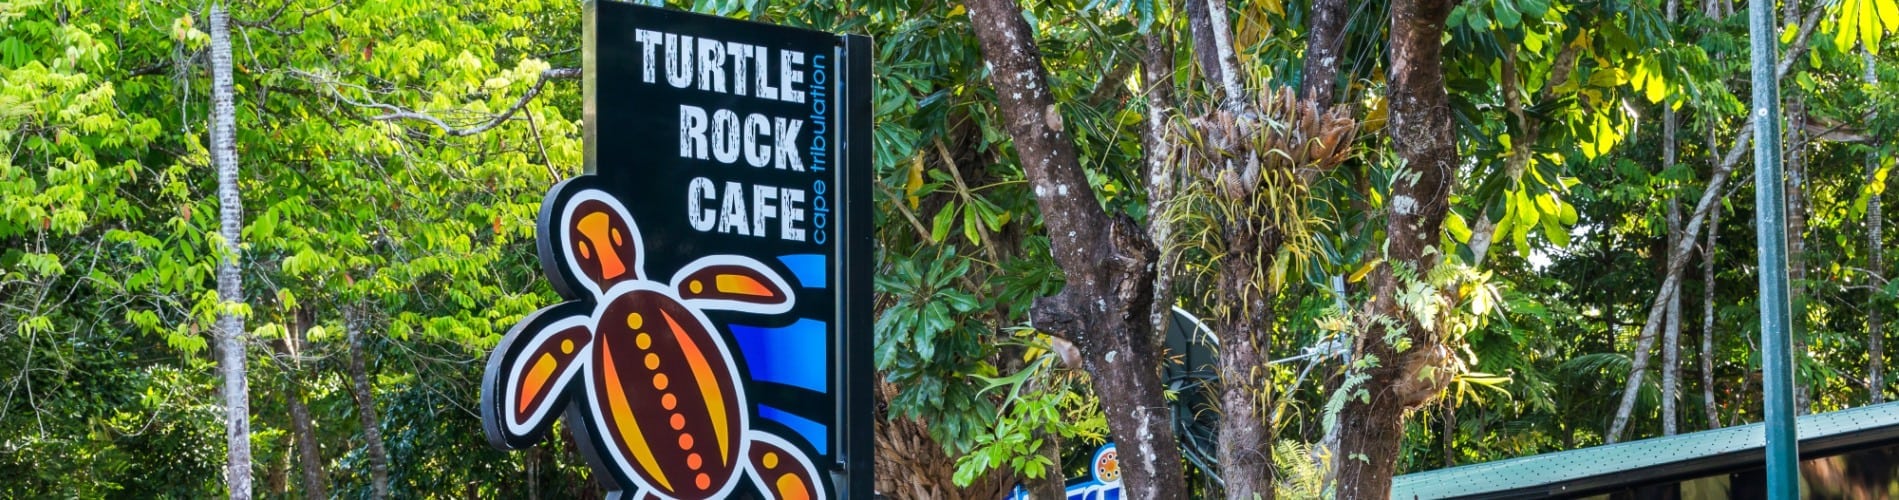 turtle rock cafe